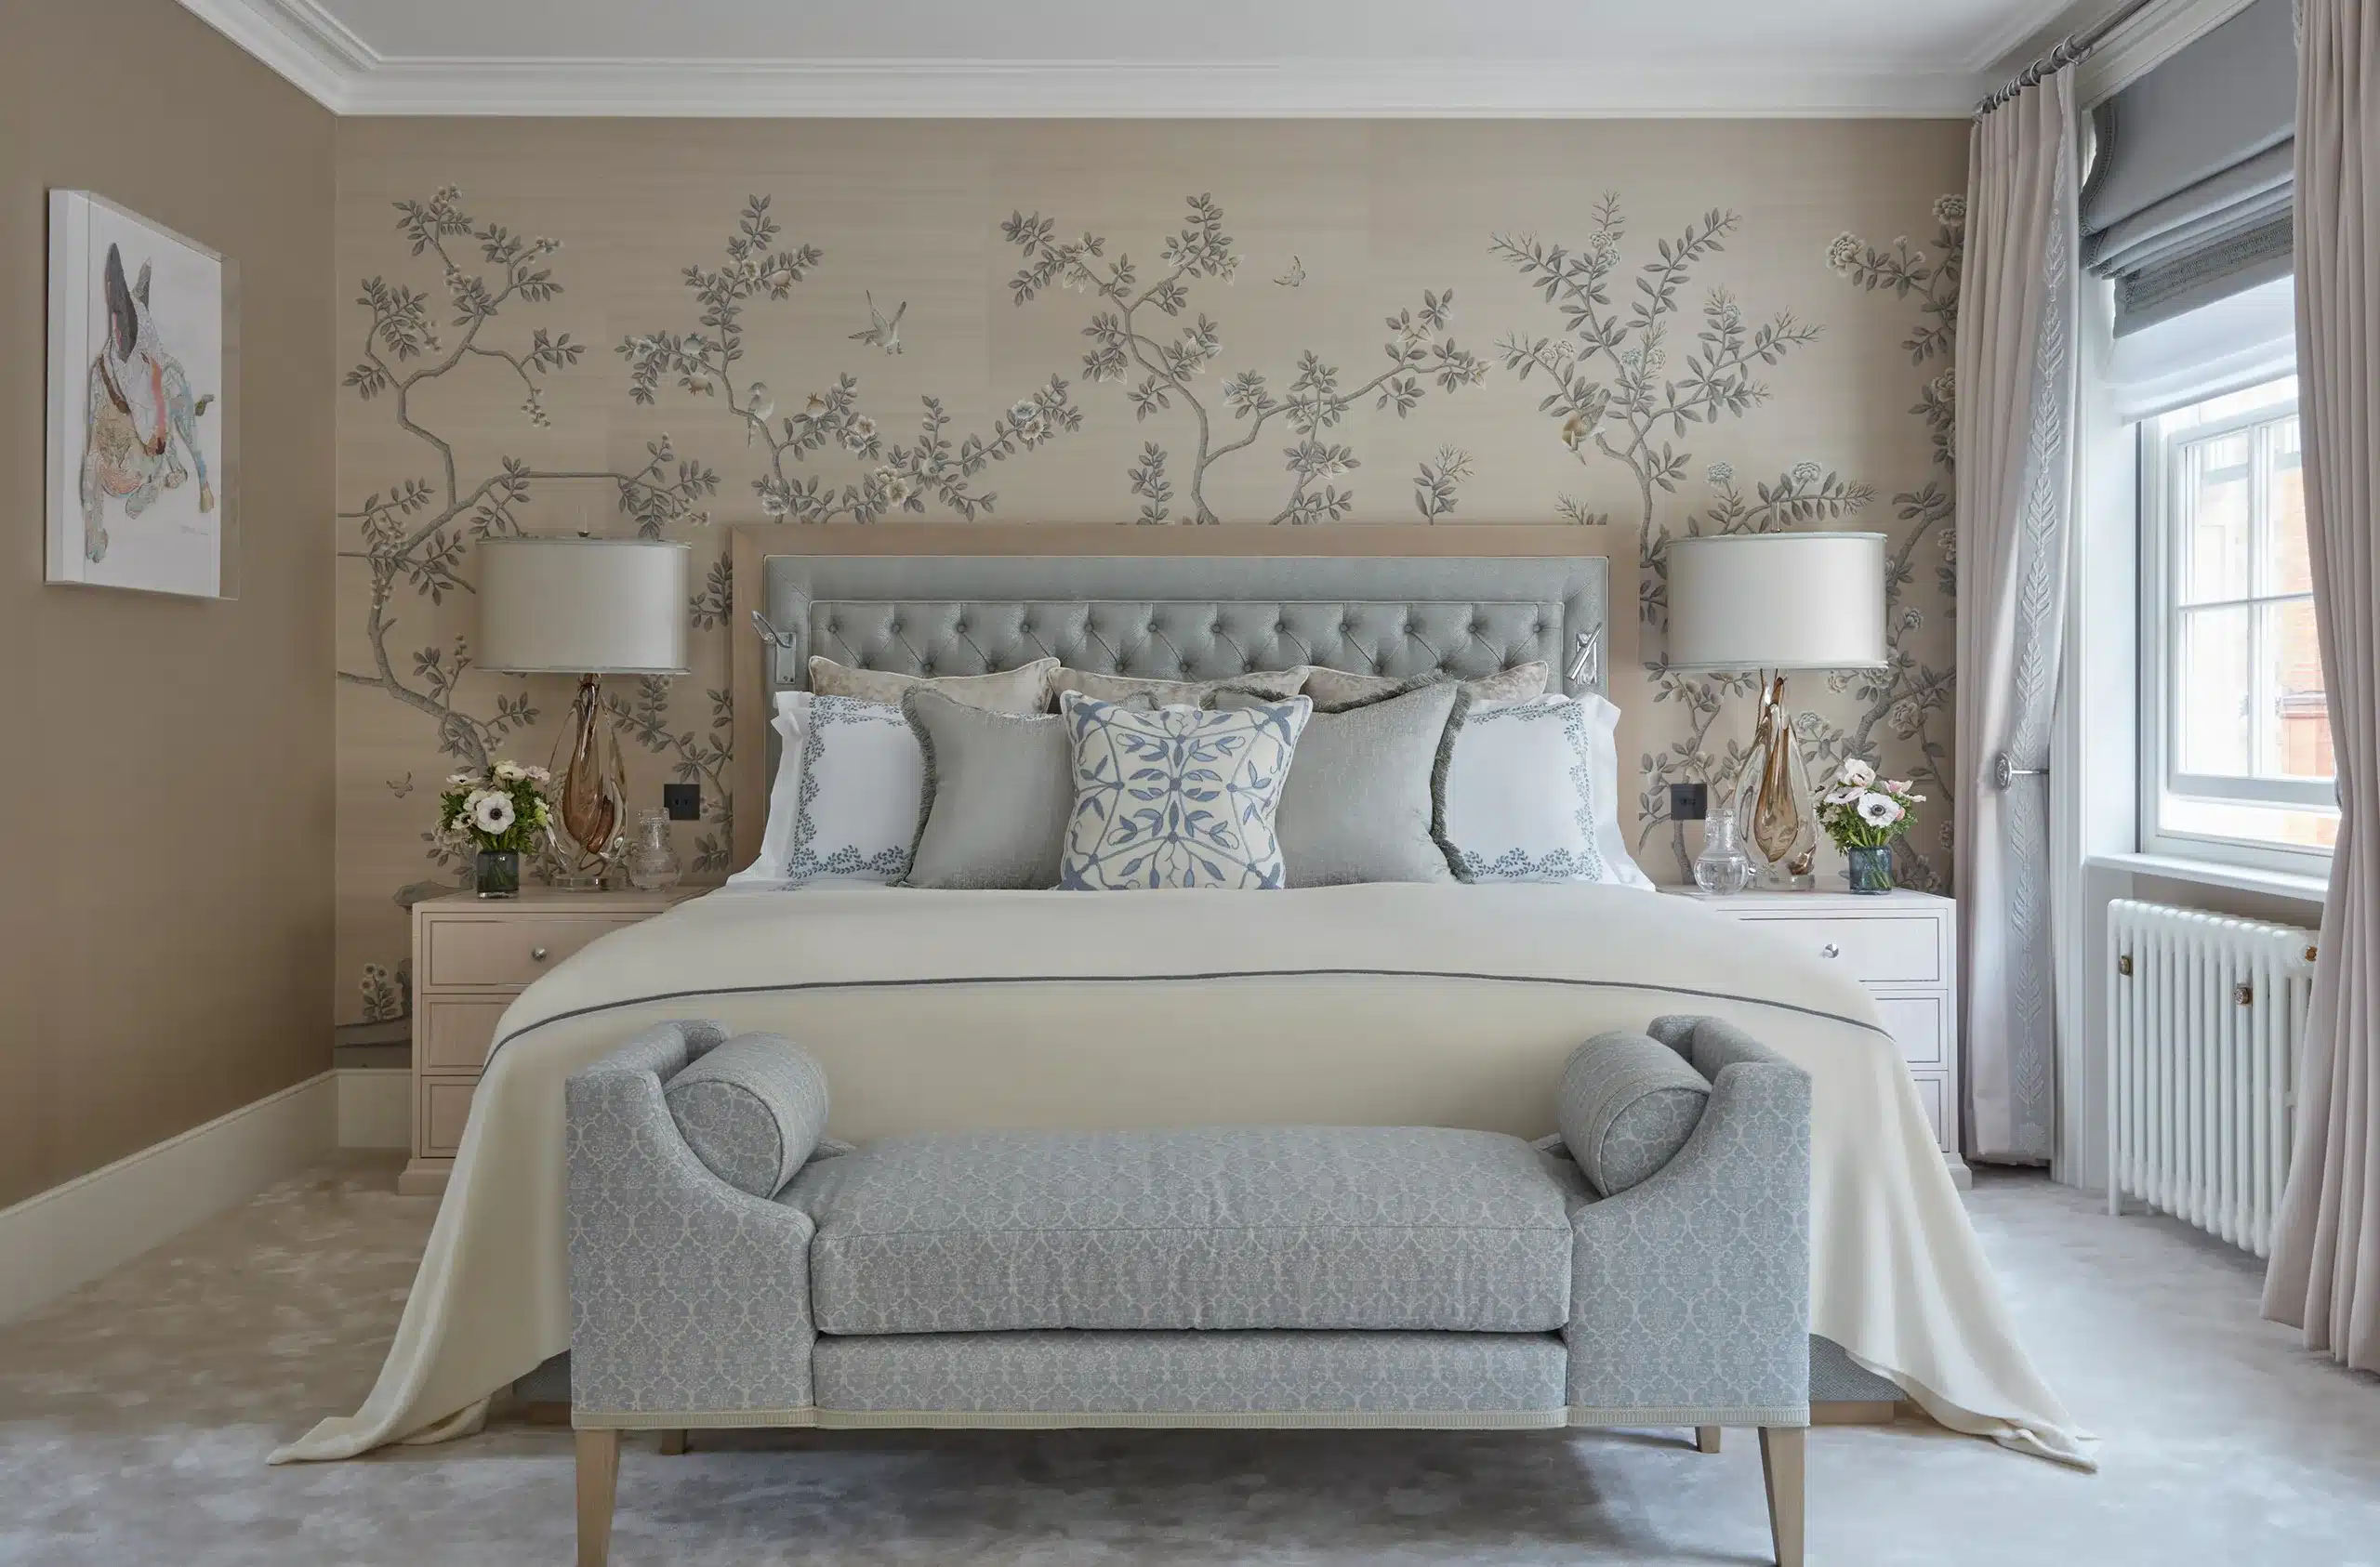 Master bedroom details in a warm hue as designed by award winning london design studio katharine pooley